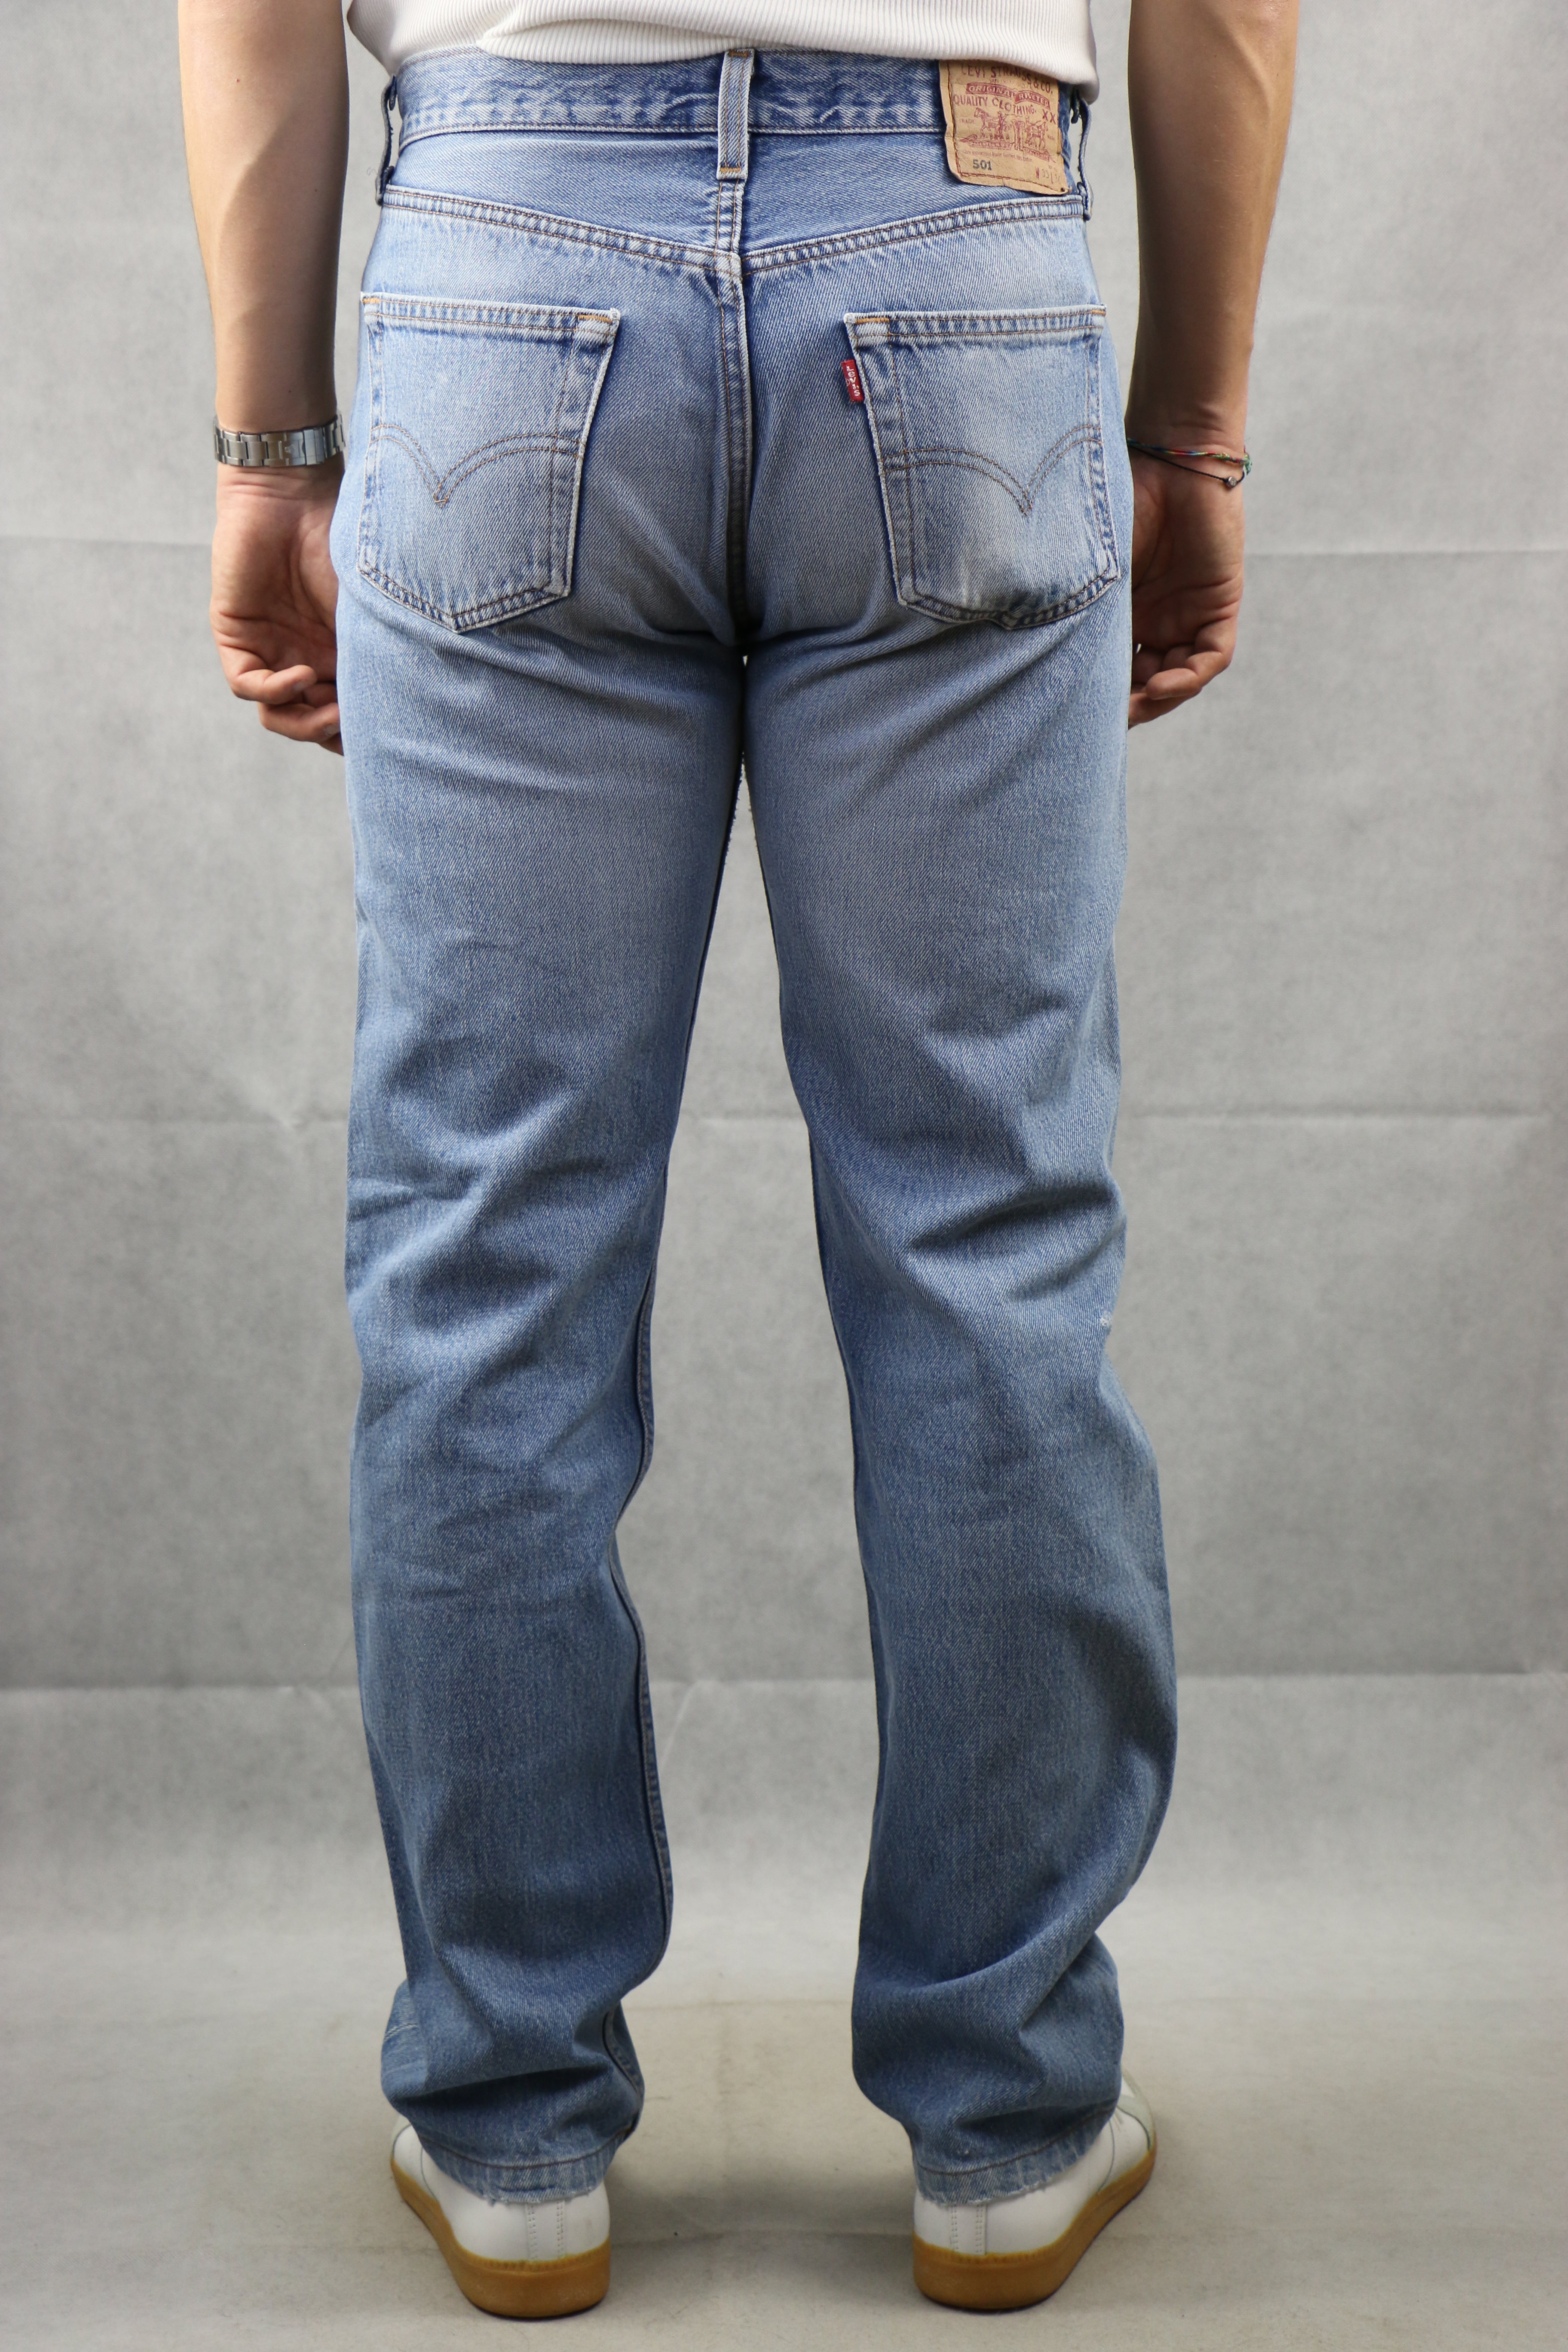 Levi's 501 Jeans Made in U.S.A. W33 L36 ~ Vintage Store Clochard92.com